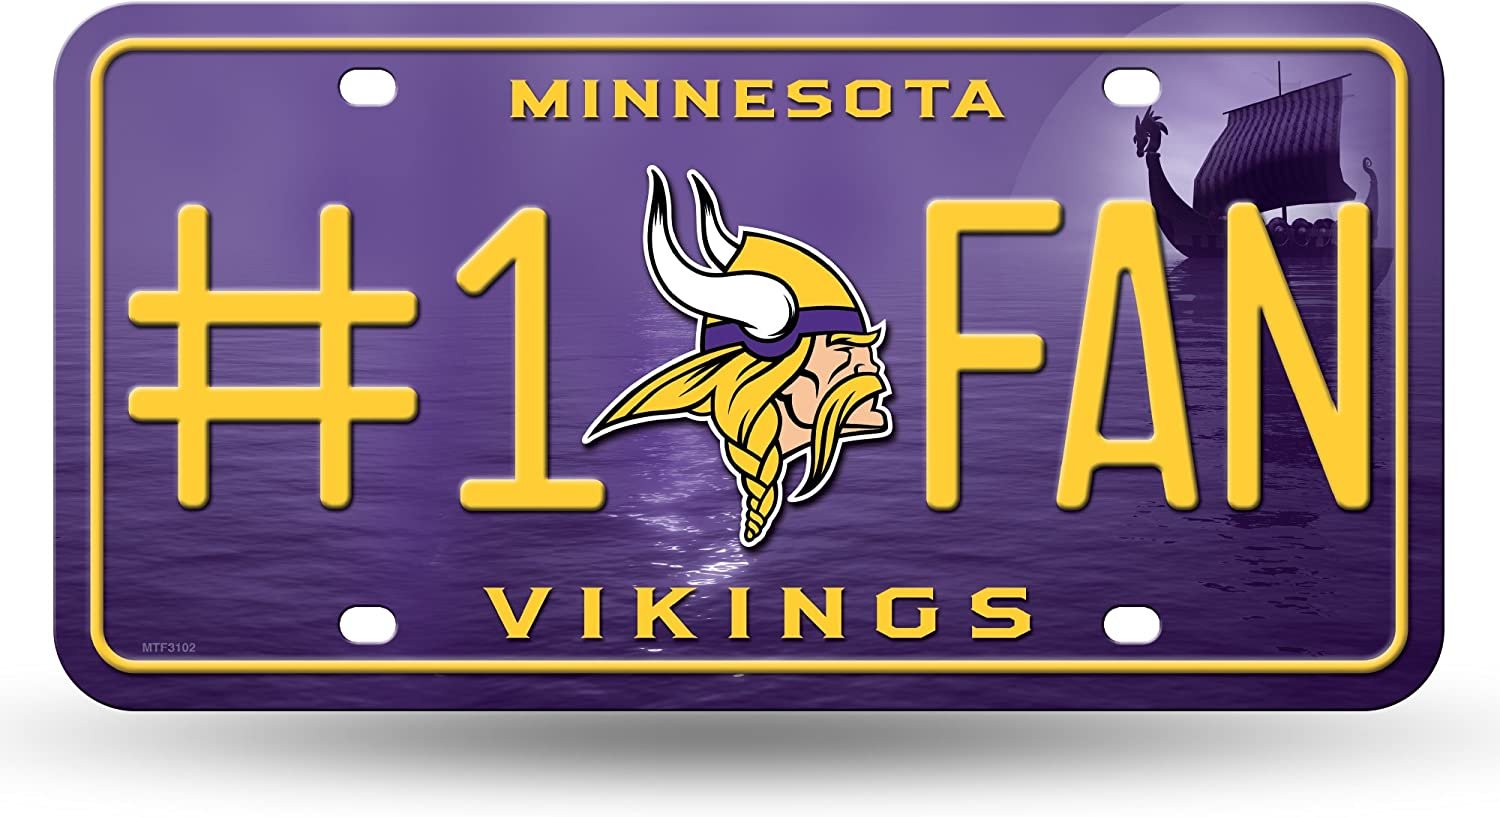 Minnesota Vikings #1 Fan Metal Tag License Plate Novelty 12x6 Inch